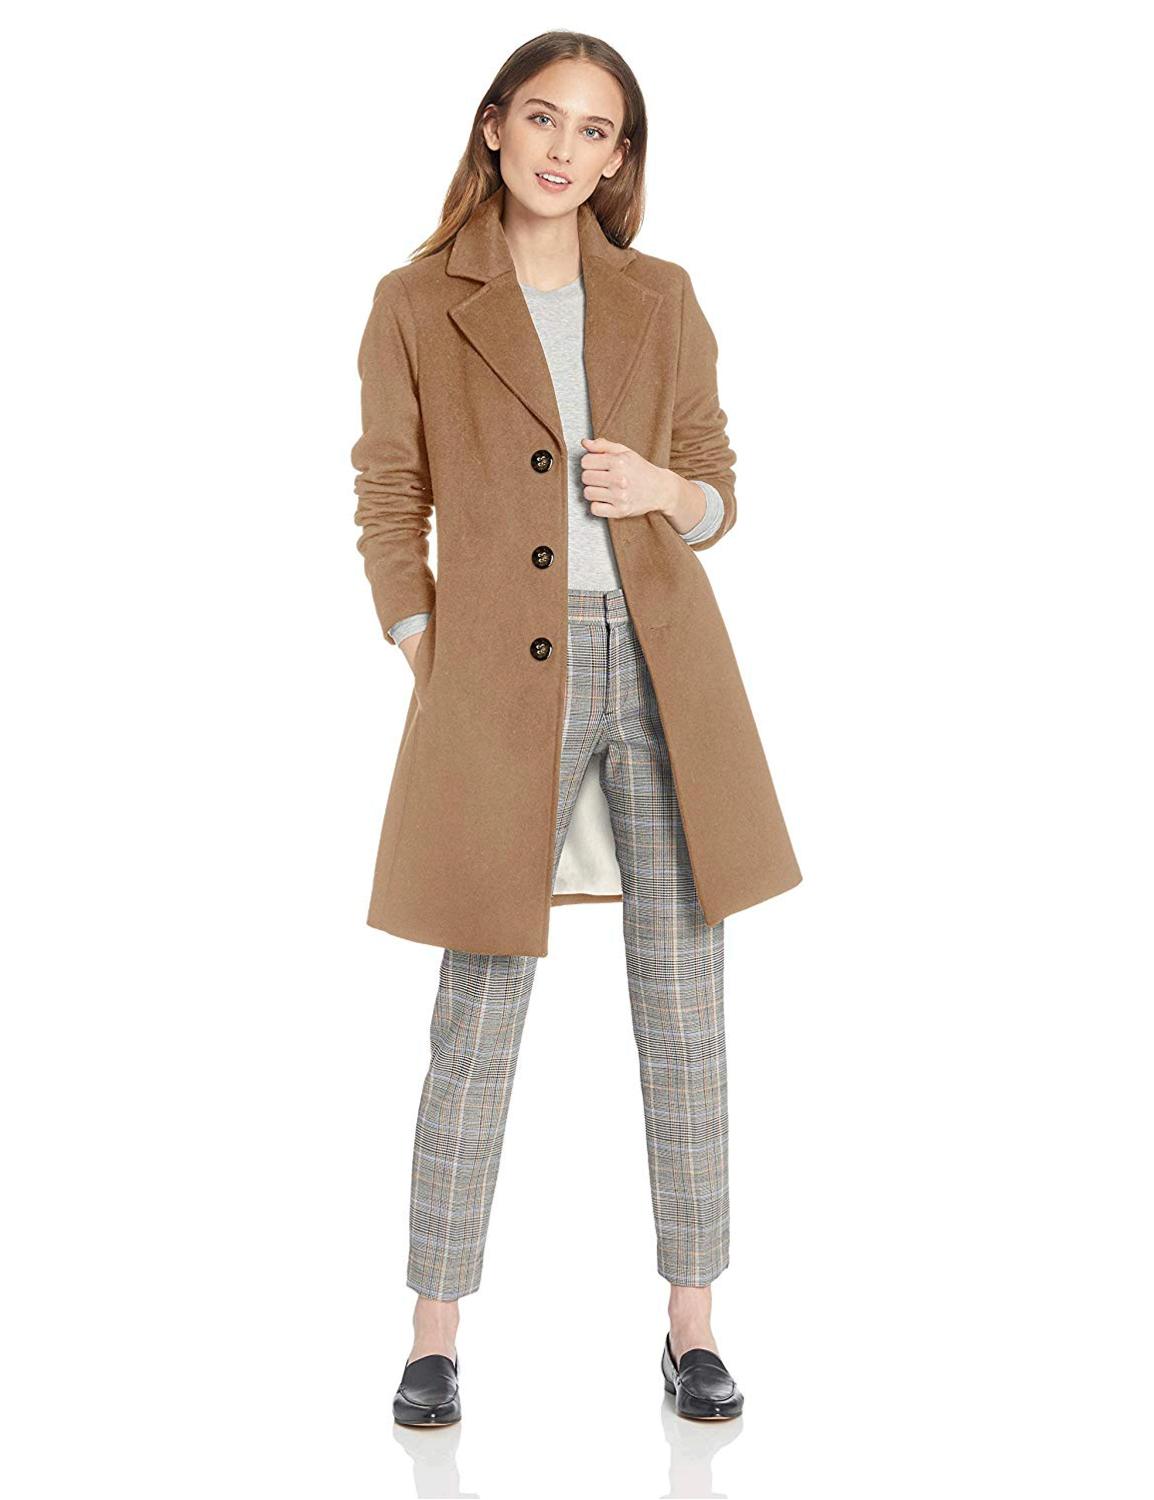 Women's Classic Cashmere Wool Blend Coat, CAMEL, 8, Camel, Size 8.0 | eBay